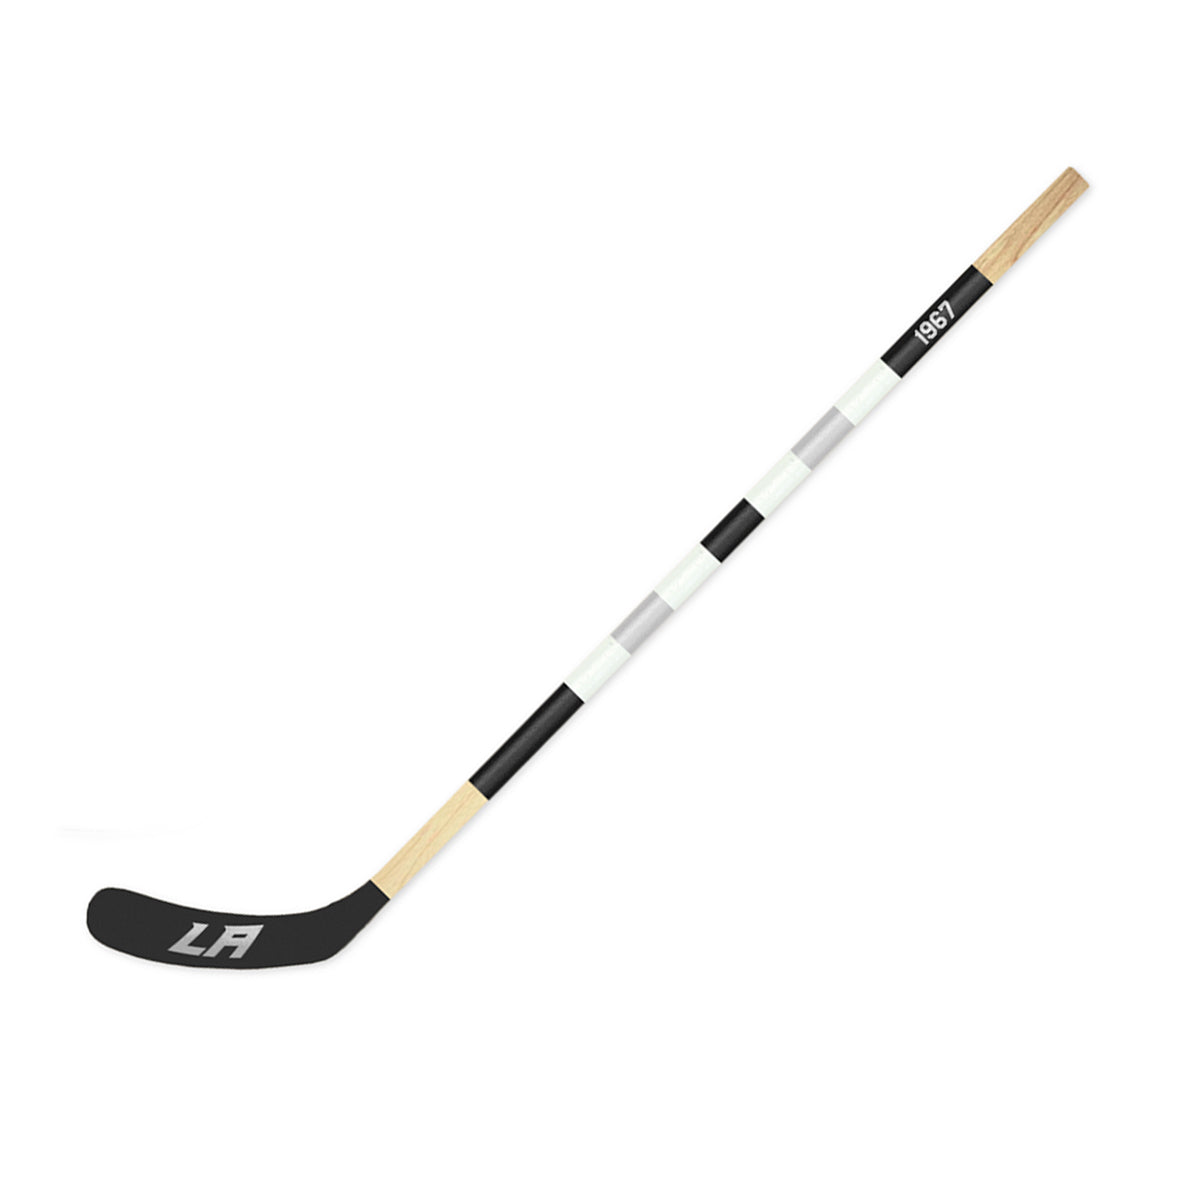 Los Angeles Mitchell Hockey Stick